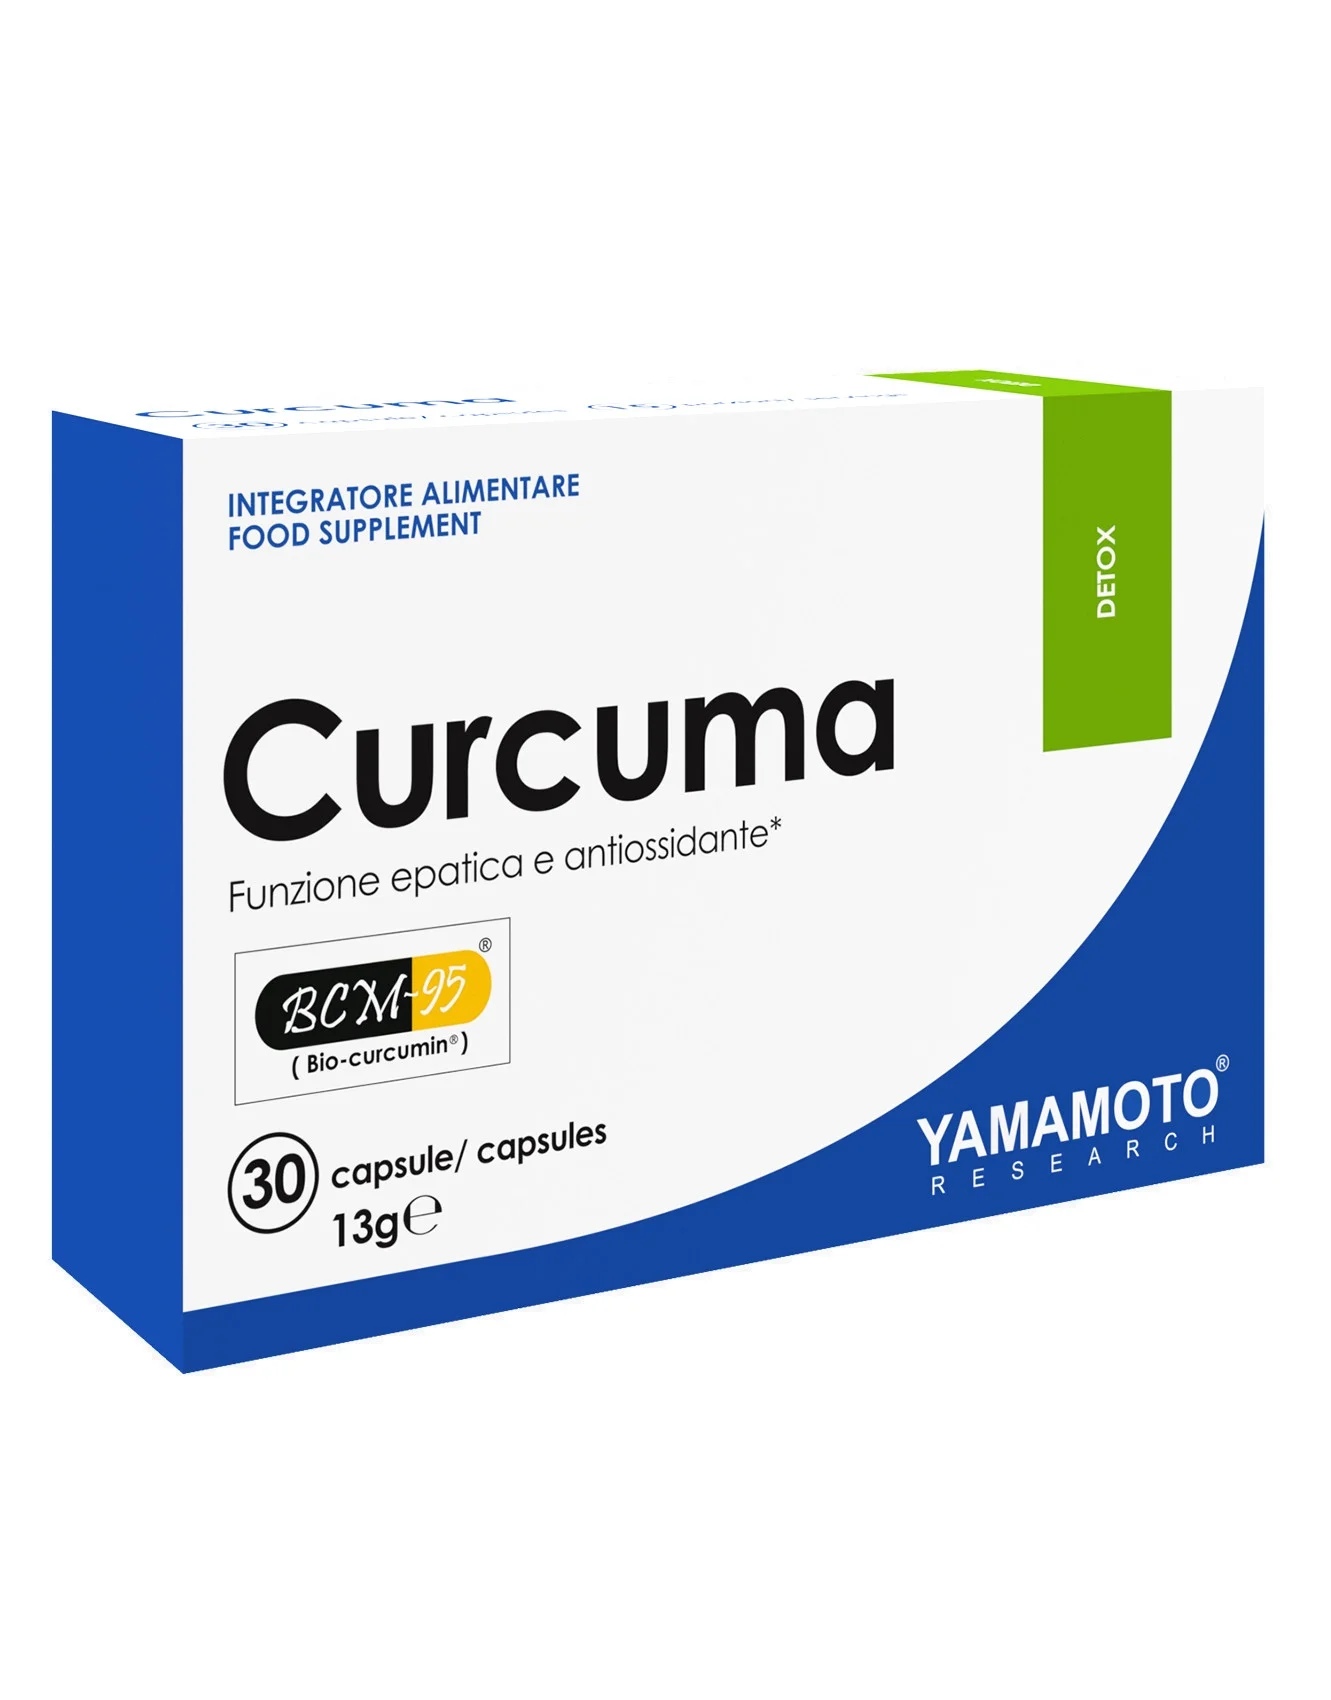 Yamamoto Natural Series Curcuma BCM-95 30 capsules / 30 doses